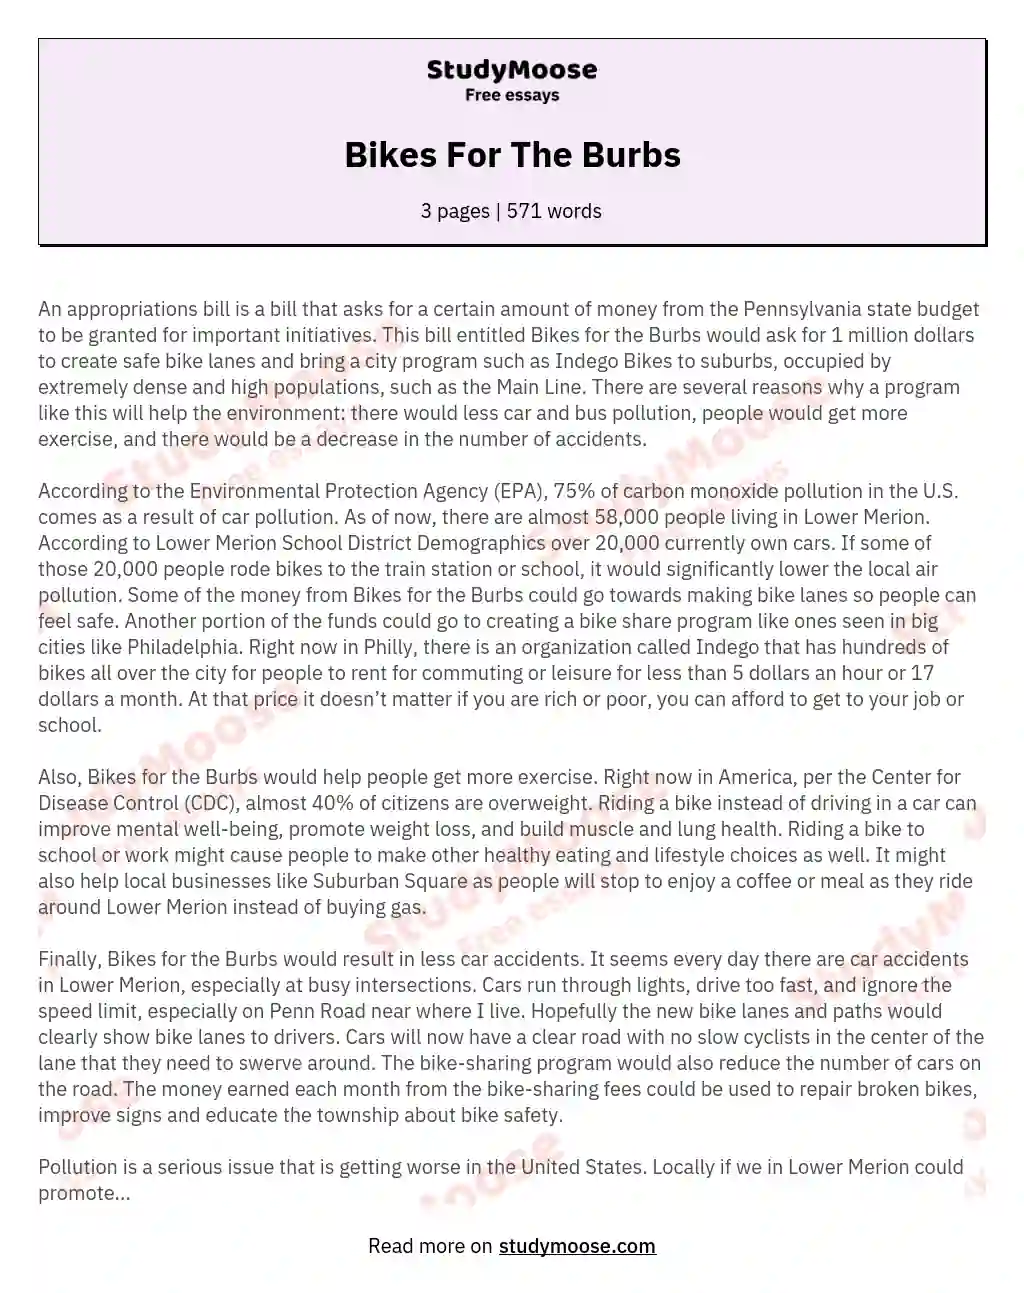 Bikes For The Burbs essay